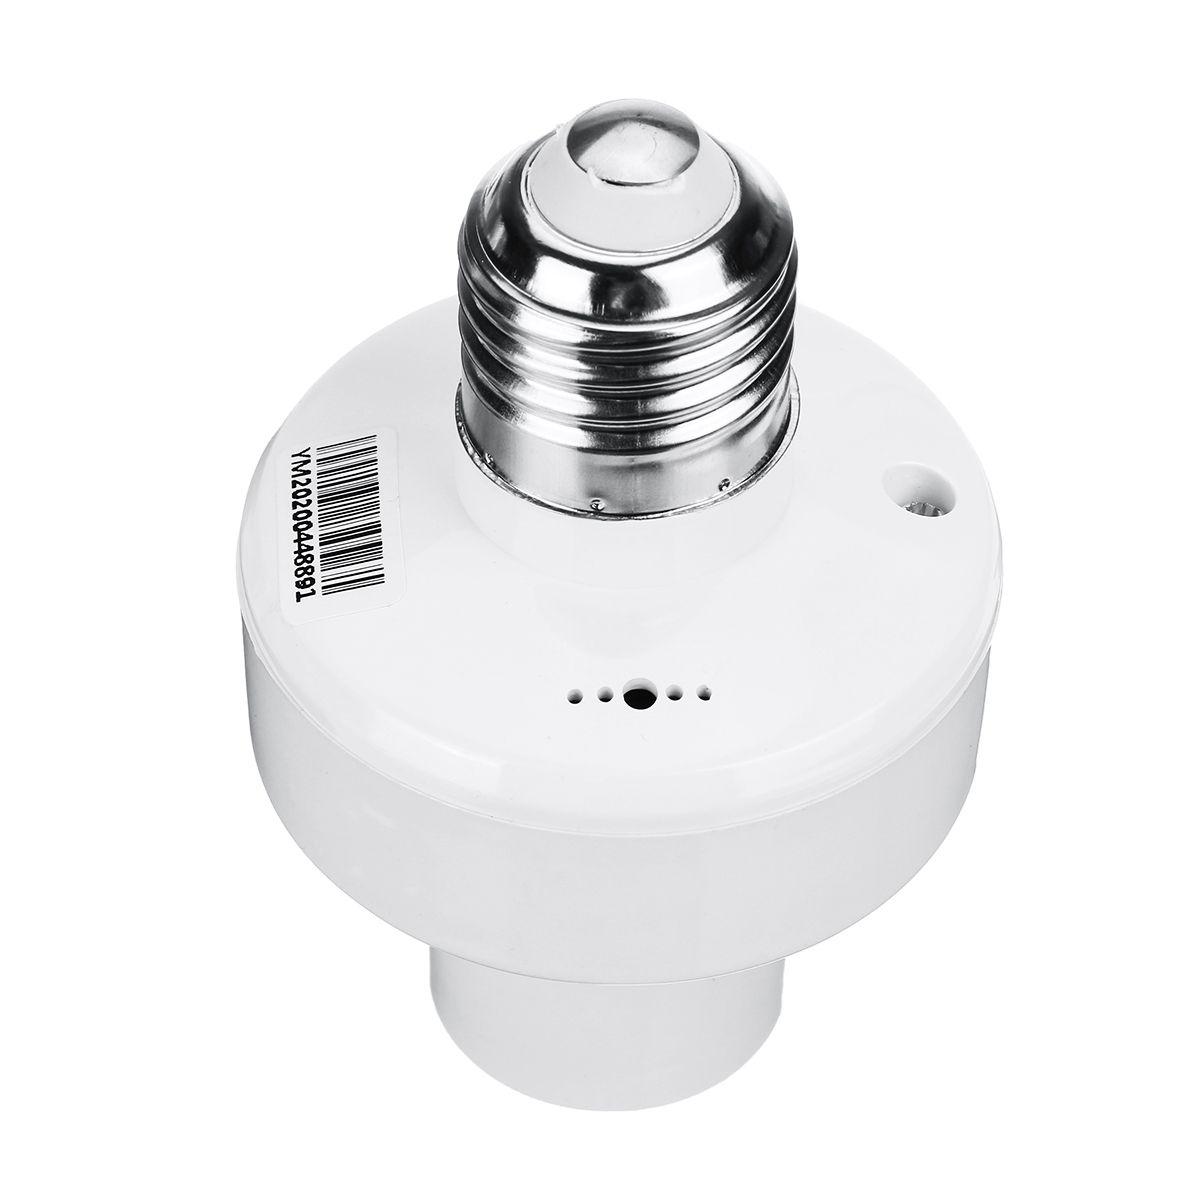 AC110V220V-Wireless-Remote-Control-E27-Lamp-Holder-Timing-Function-Bulb-Adapter-Light-Socket-1690143